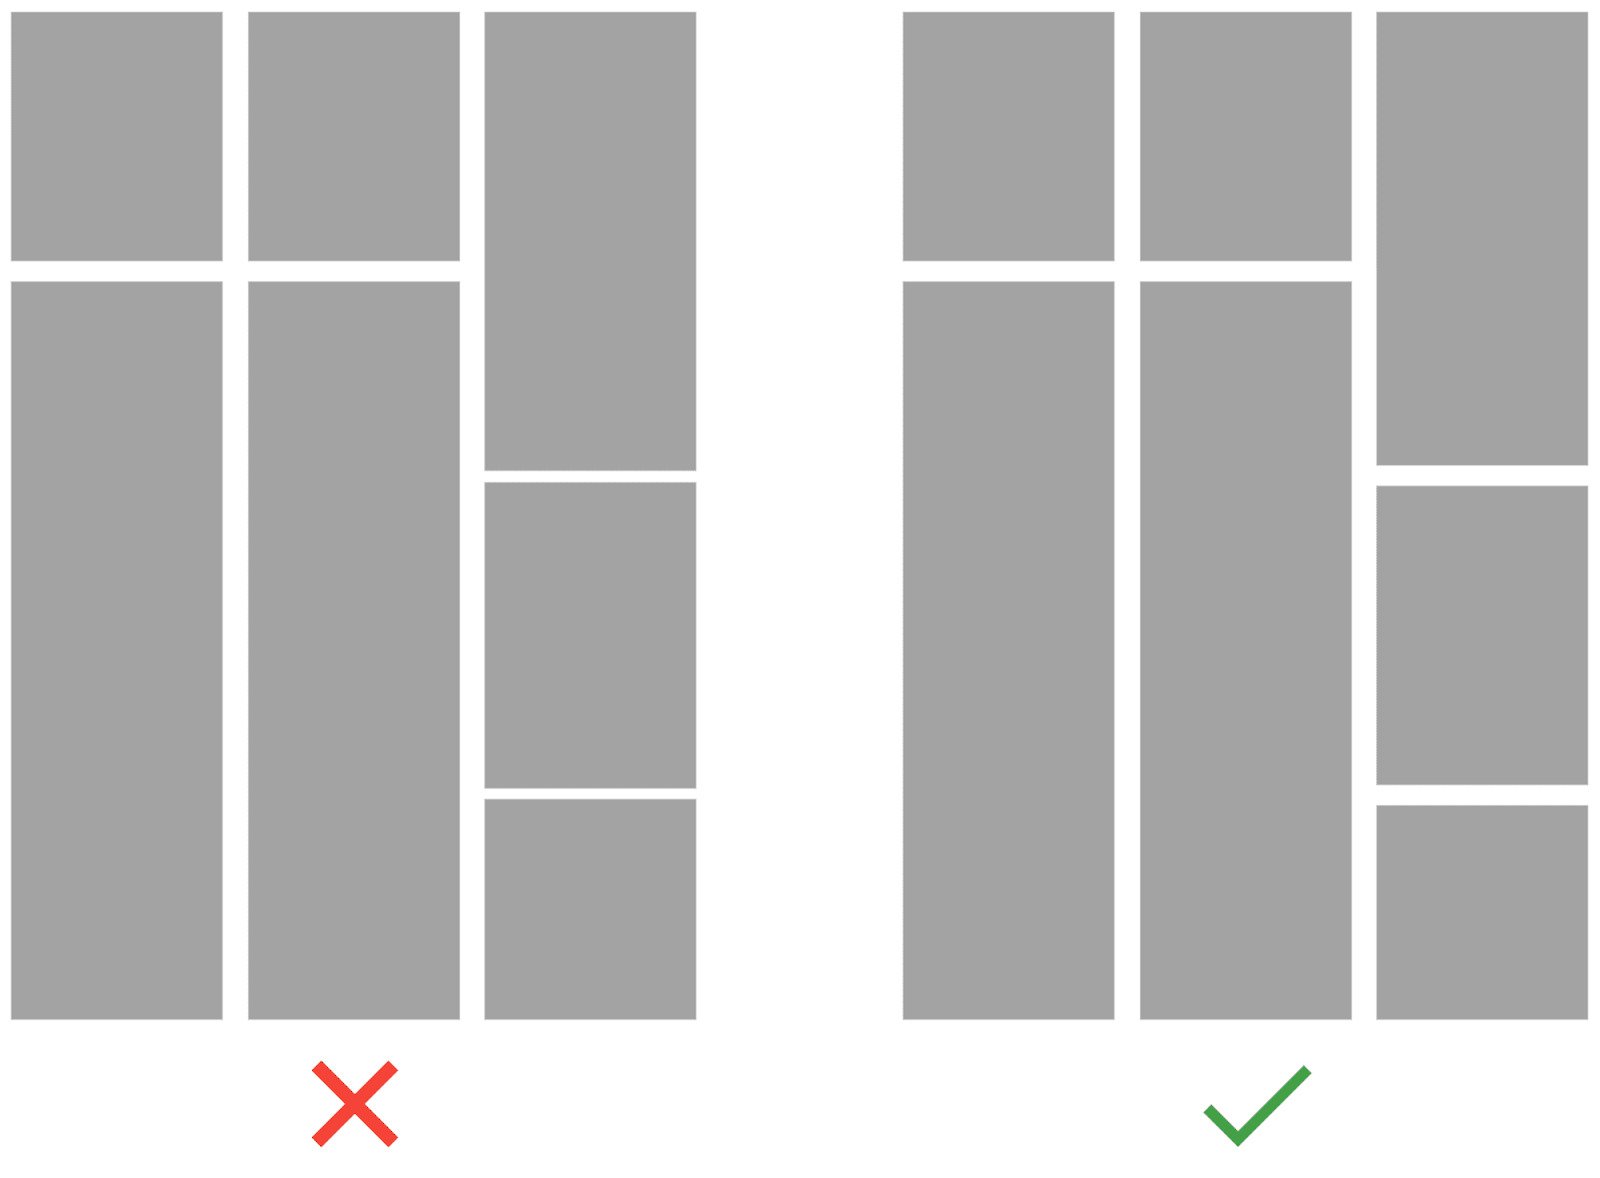 n the left, the vertical spacing between the blocks varies. On the right, the vertical spacing is consistent.